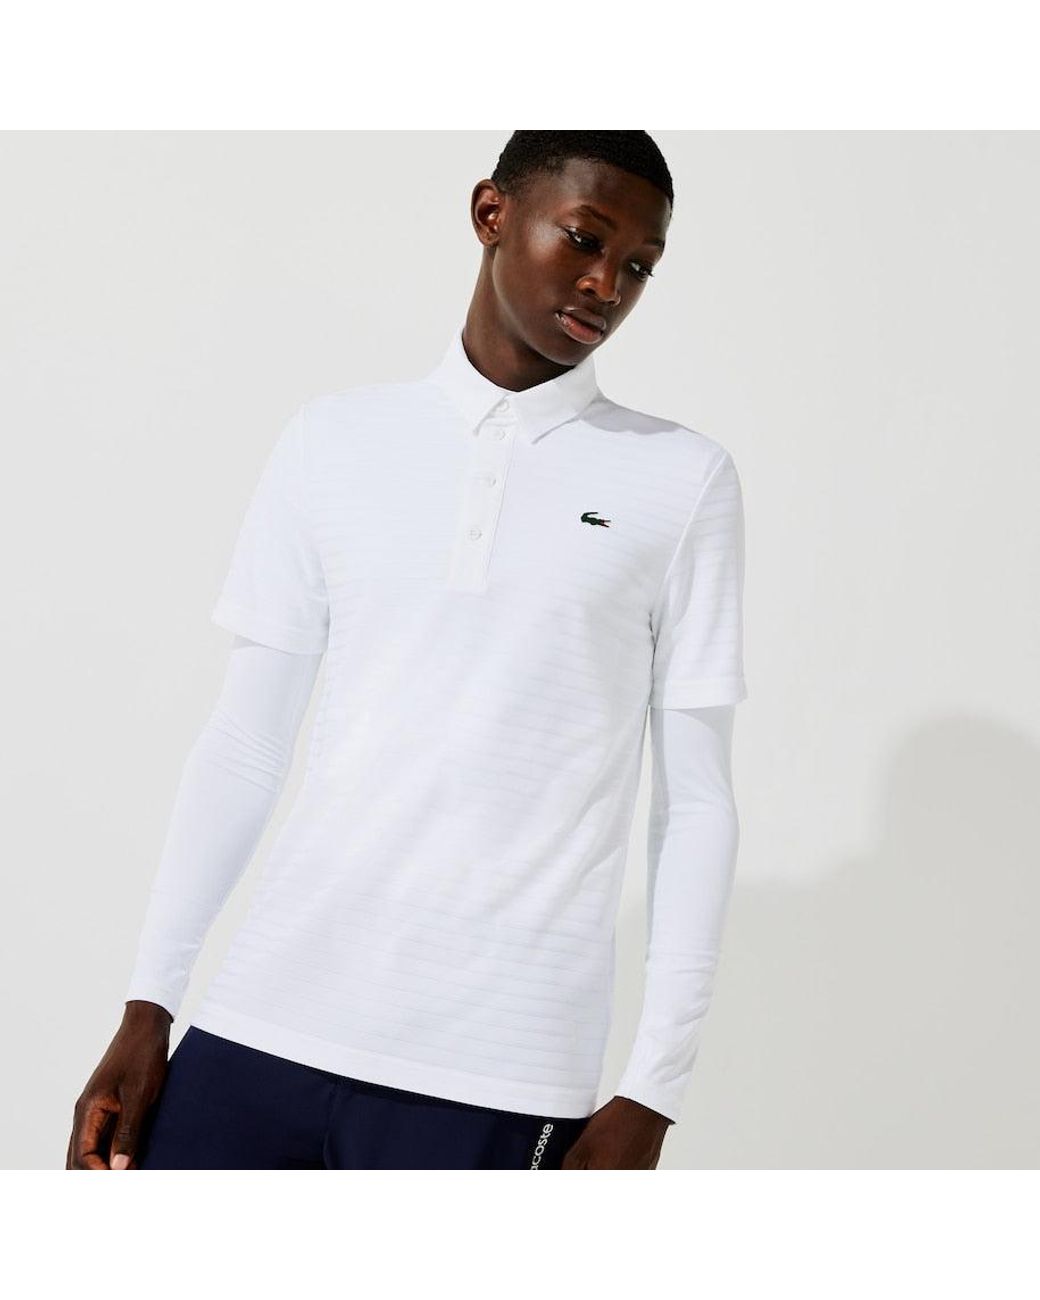 Lacoste Men's Sport Textured Breathable Golf Polo White for Men